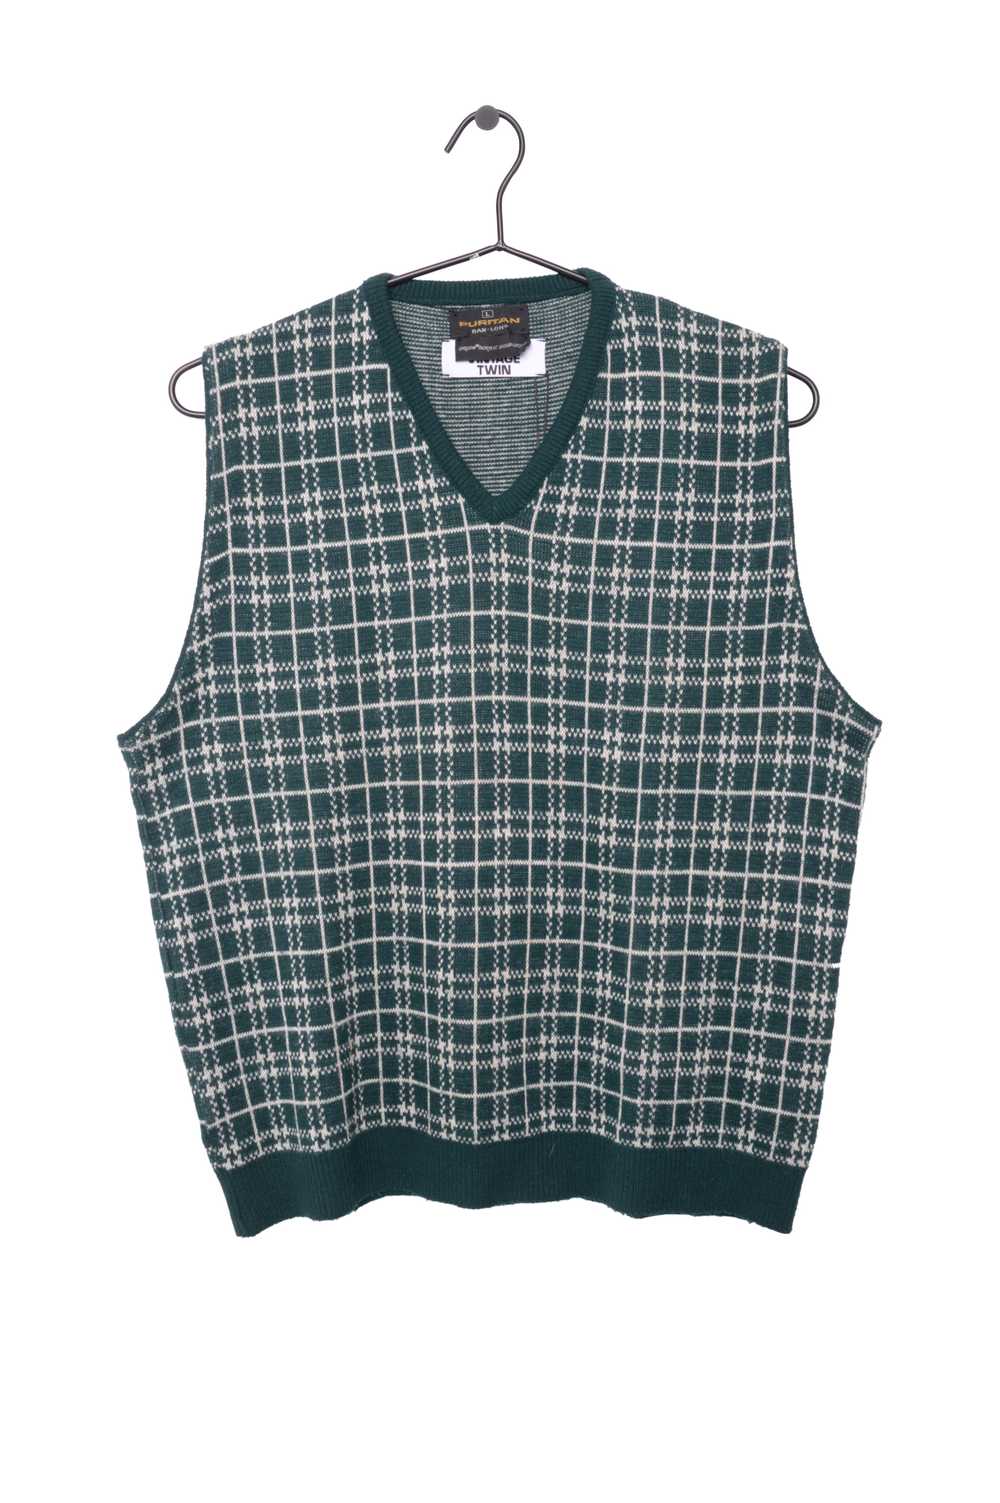 Grid Sweater Vest - image 1